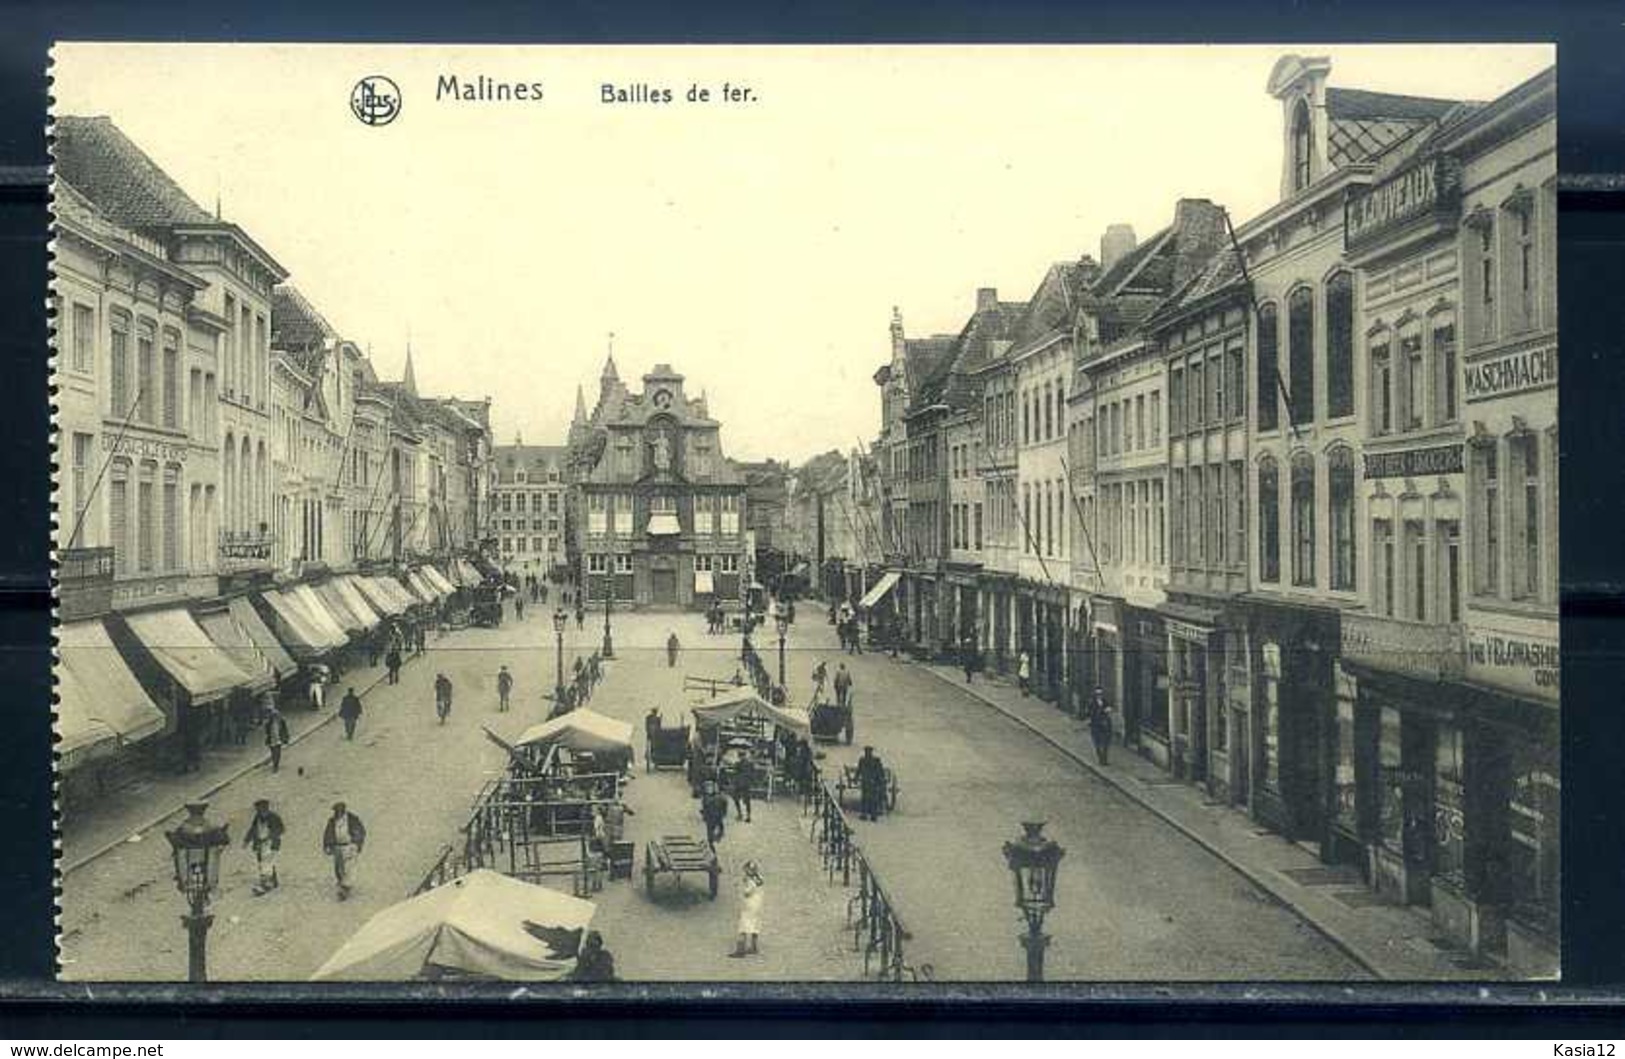 K11924)Cartes Postales: Malines, Bailles De Fer - Mechelen